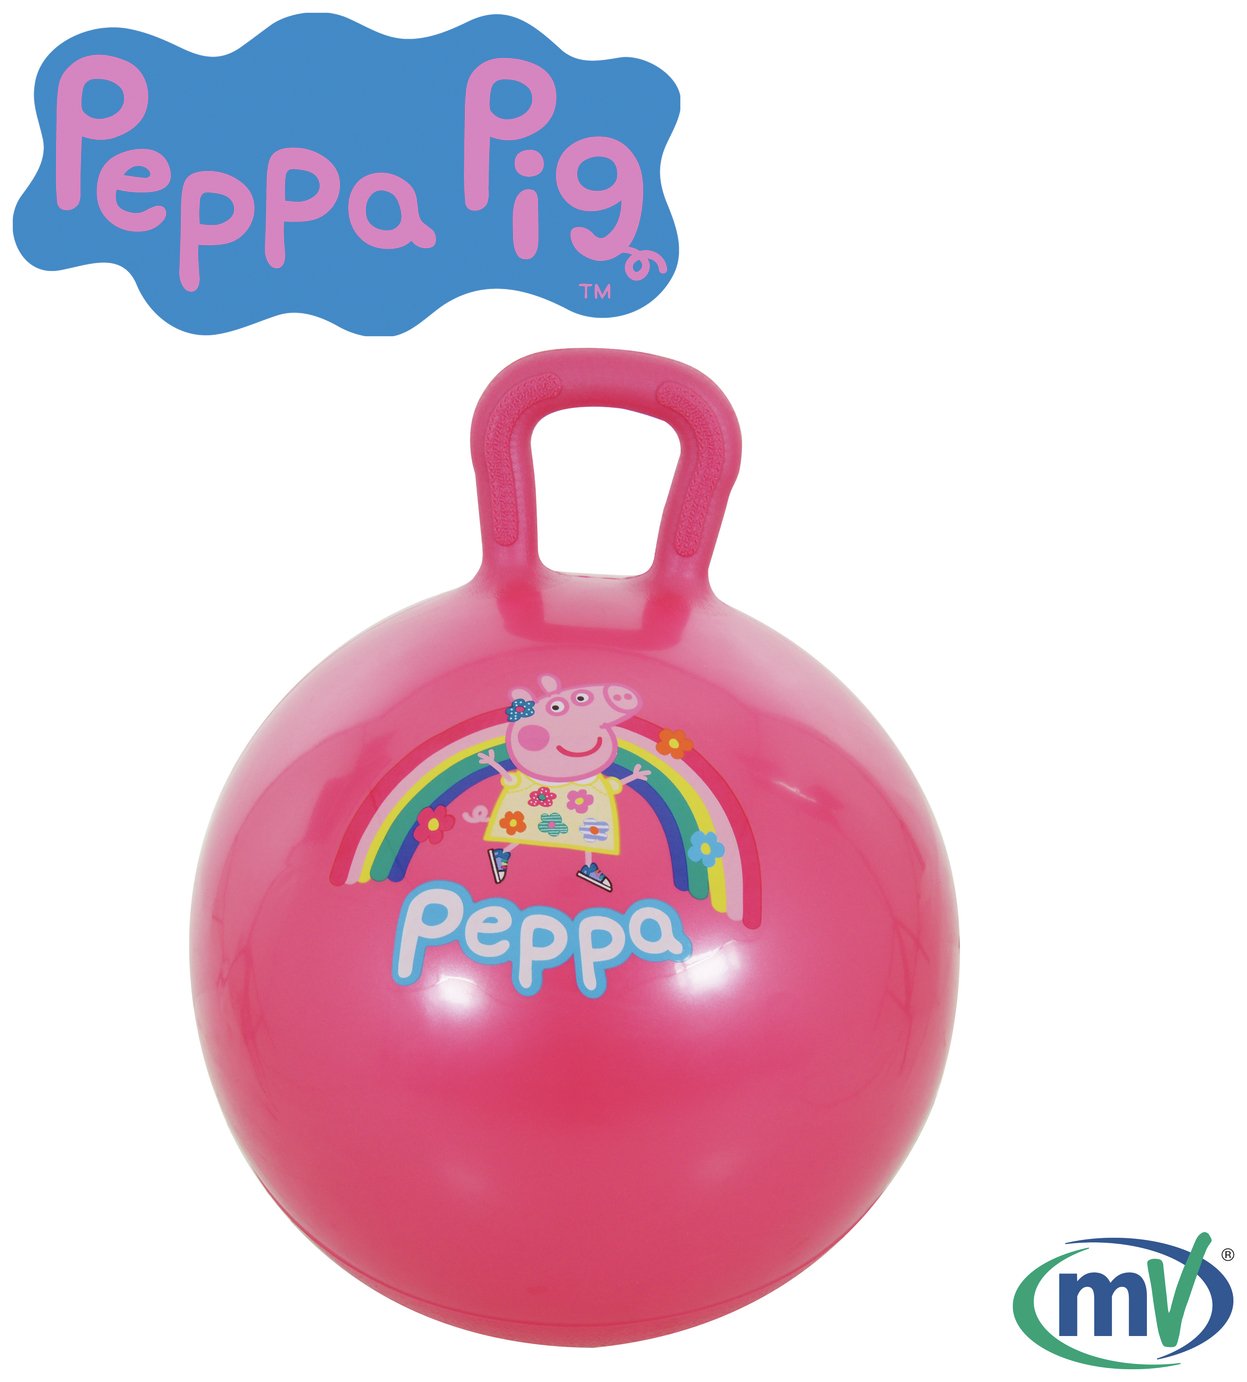 Peppa Pig Space Hopper Review